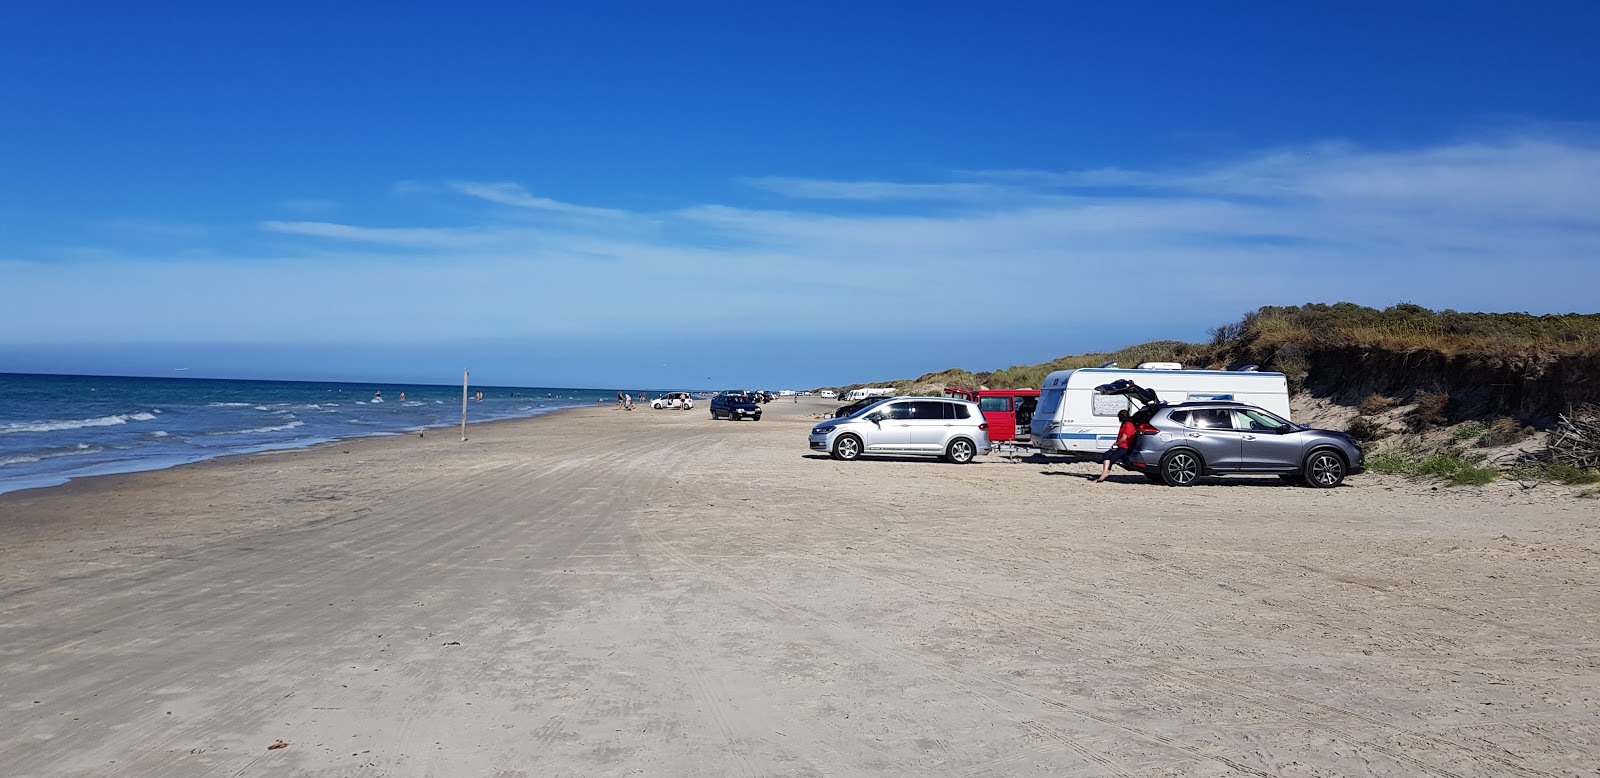 Kjul Beach的照片 带有长直海岸